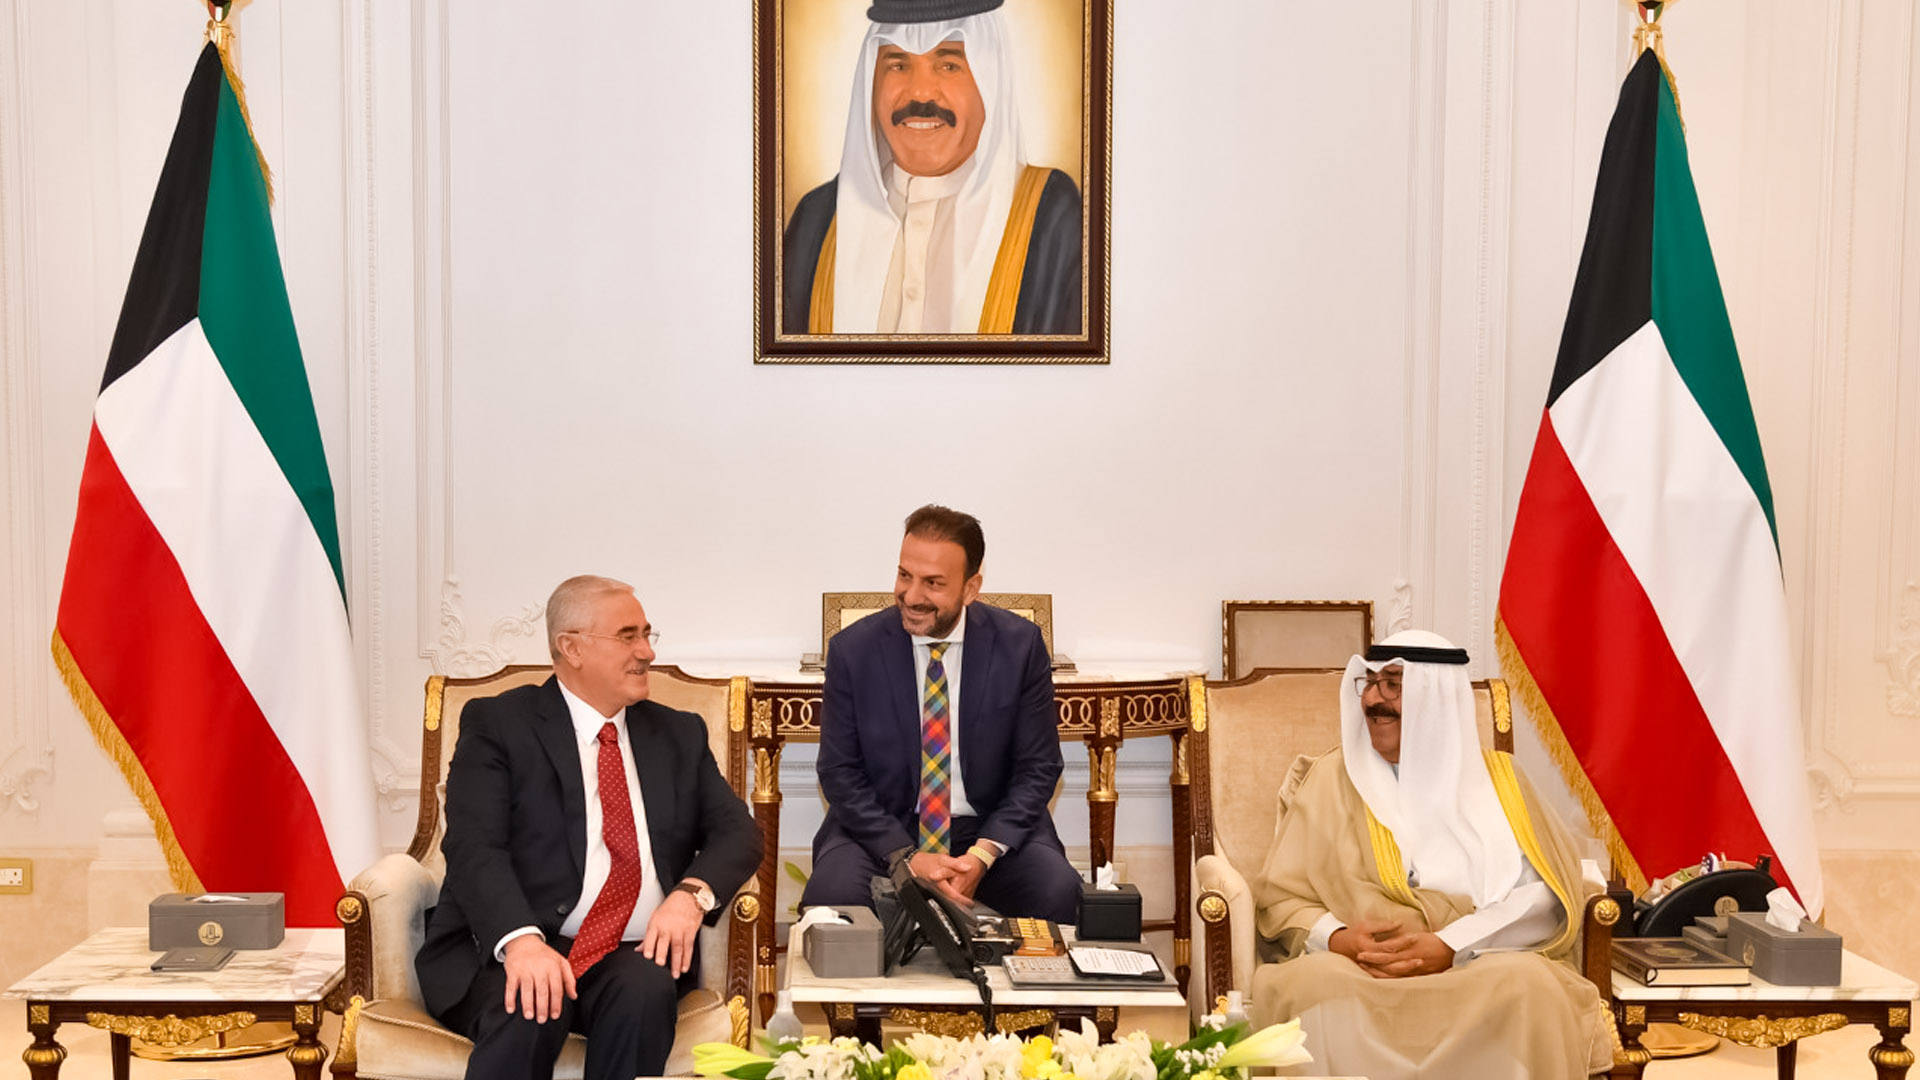 Kuwaiti Deputy Amir meets with Turkish Supreme Judicial Council President